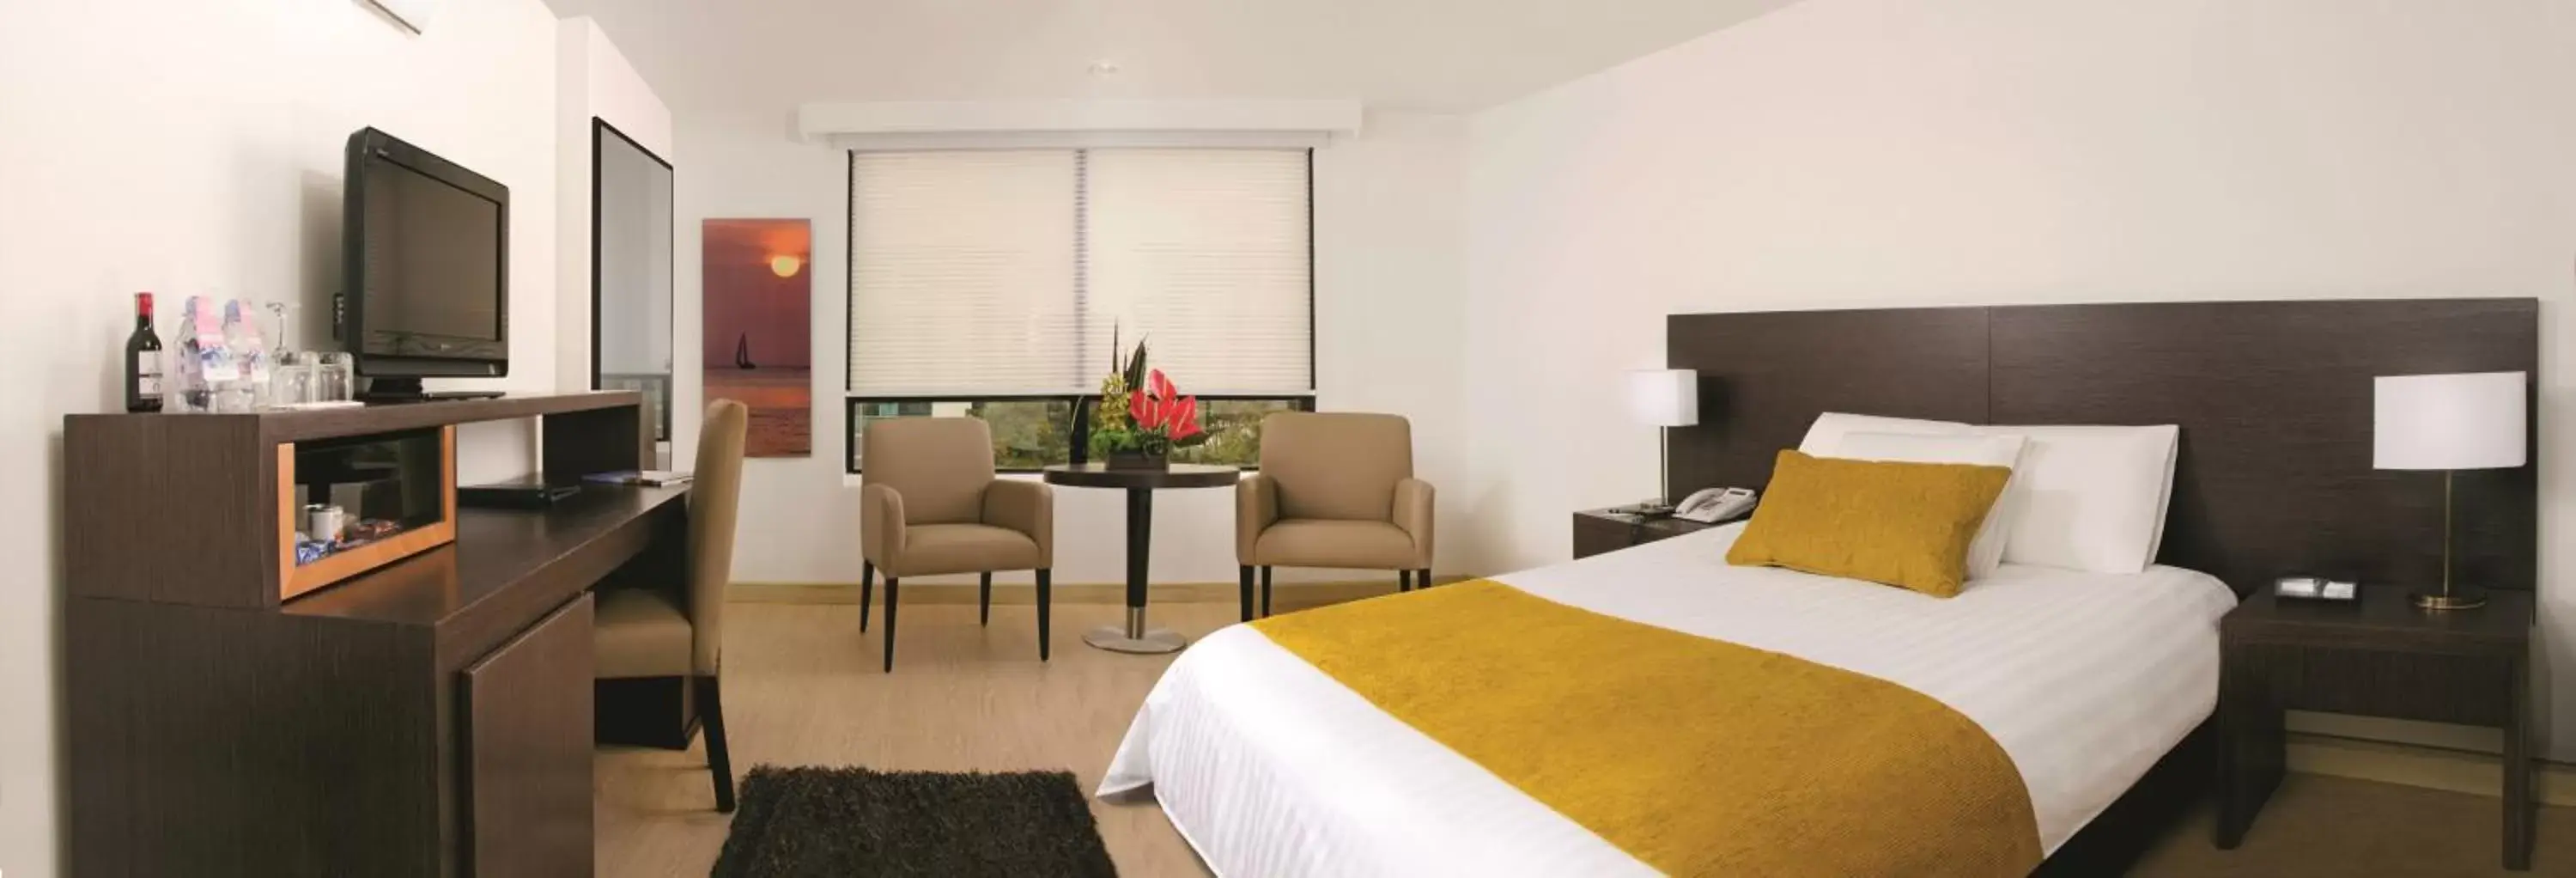 Bedroom in Hotel Parque 97 Suites